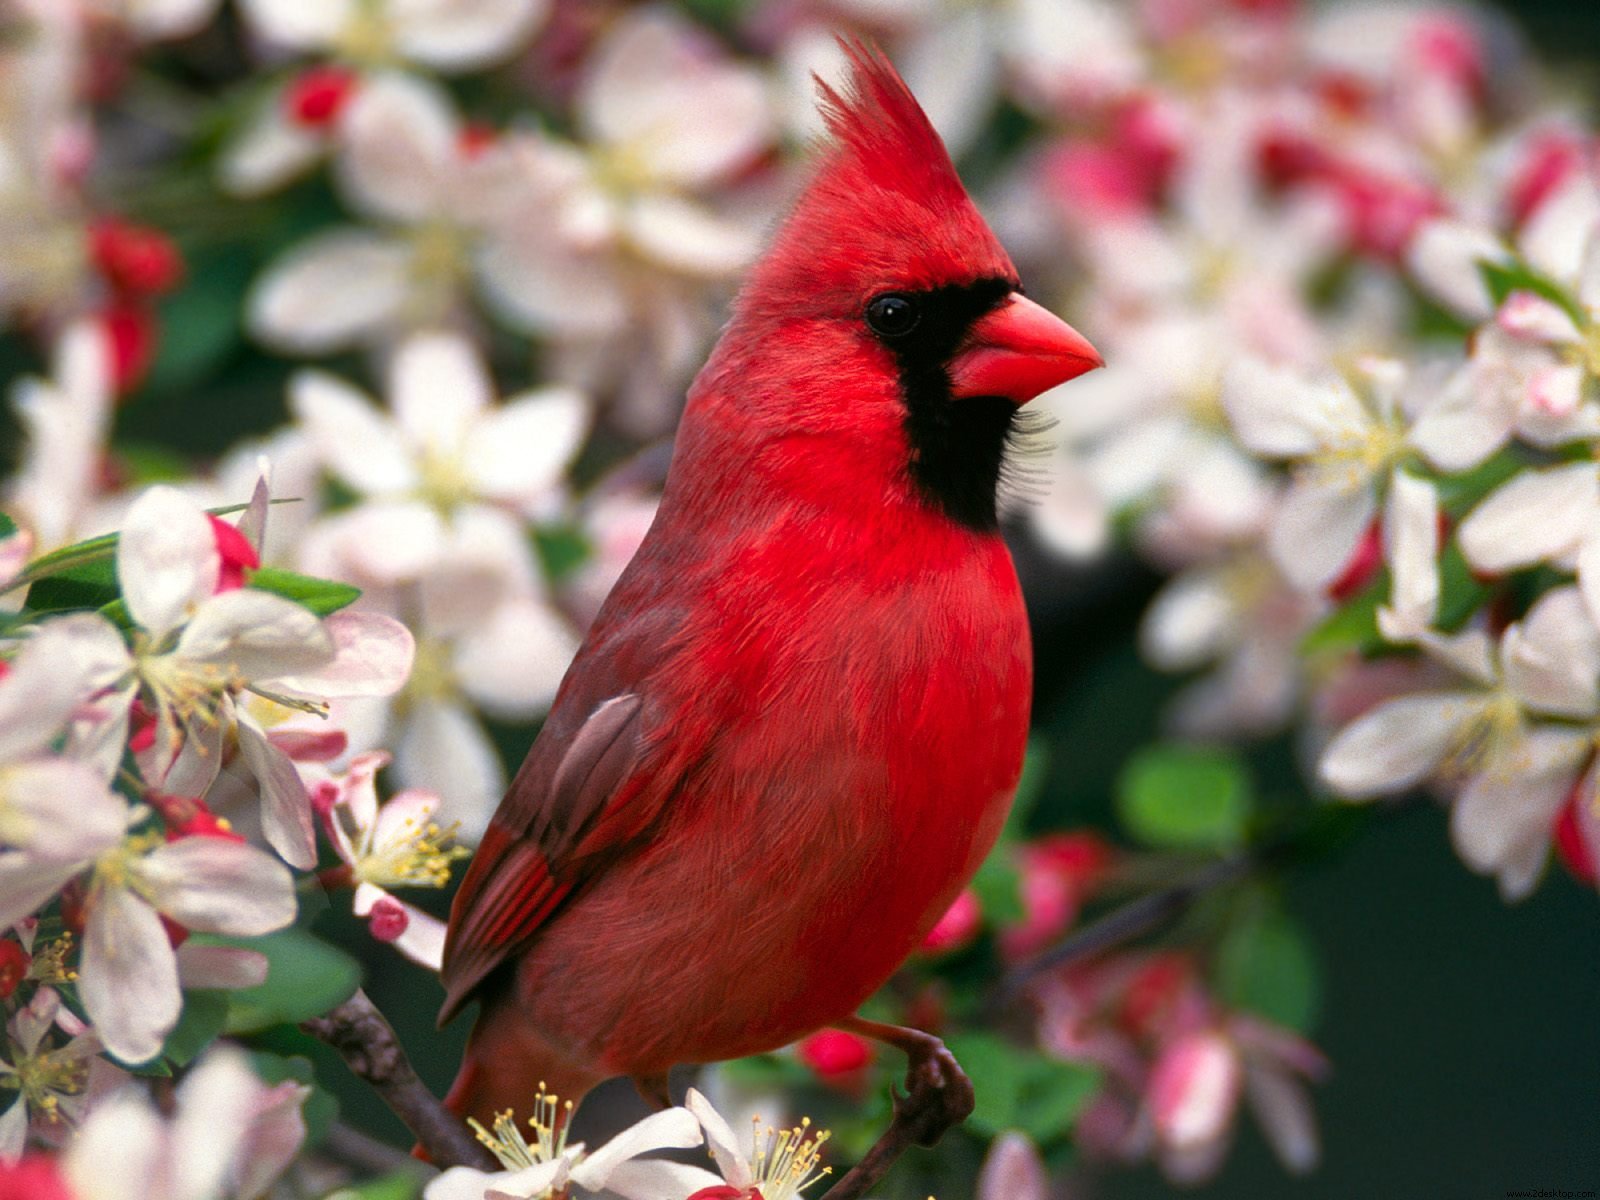 163456 descargar imagen animales, aves, cardenal: fondos de pantalla y protectores de pantalla gratis